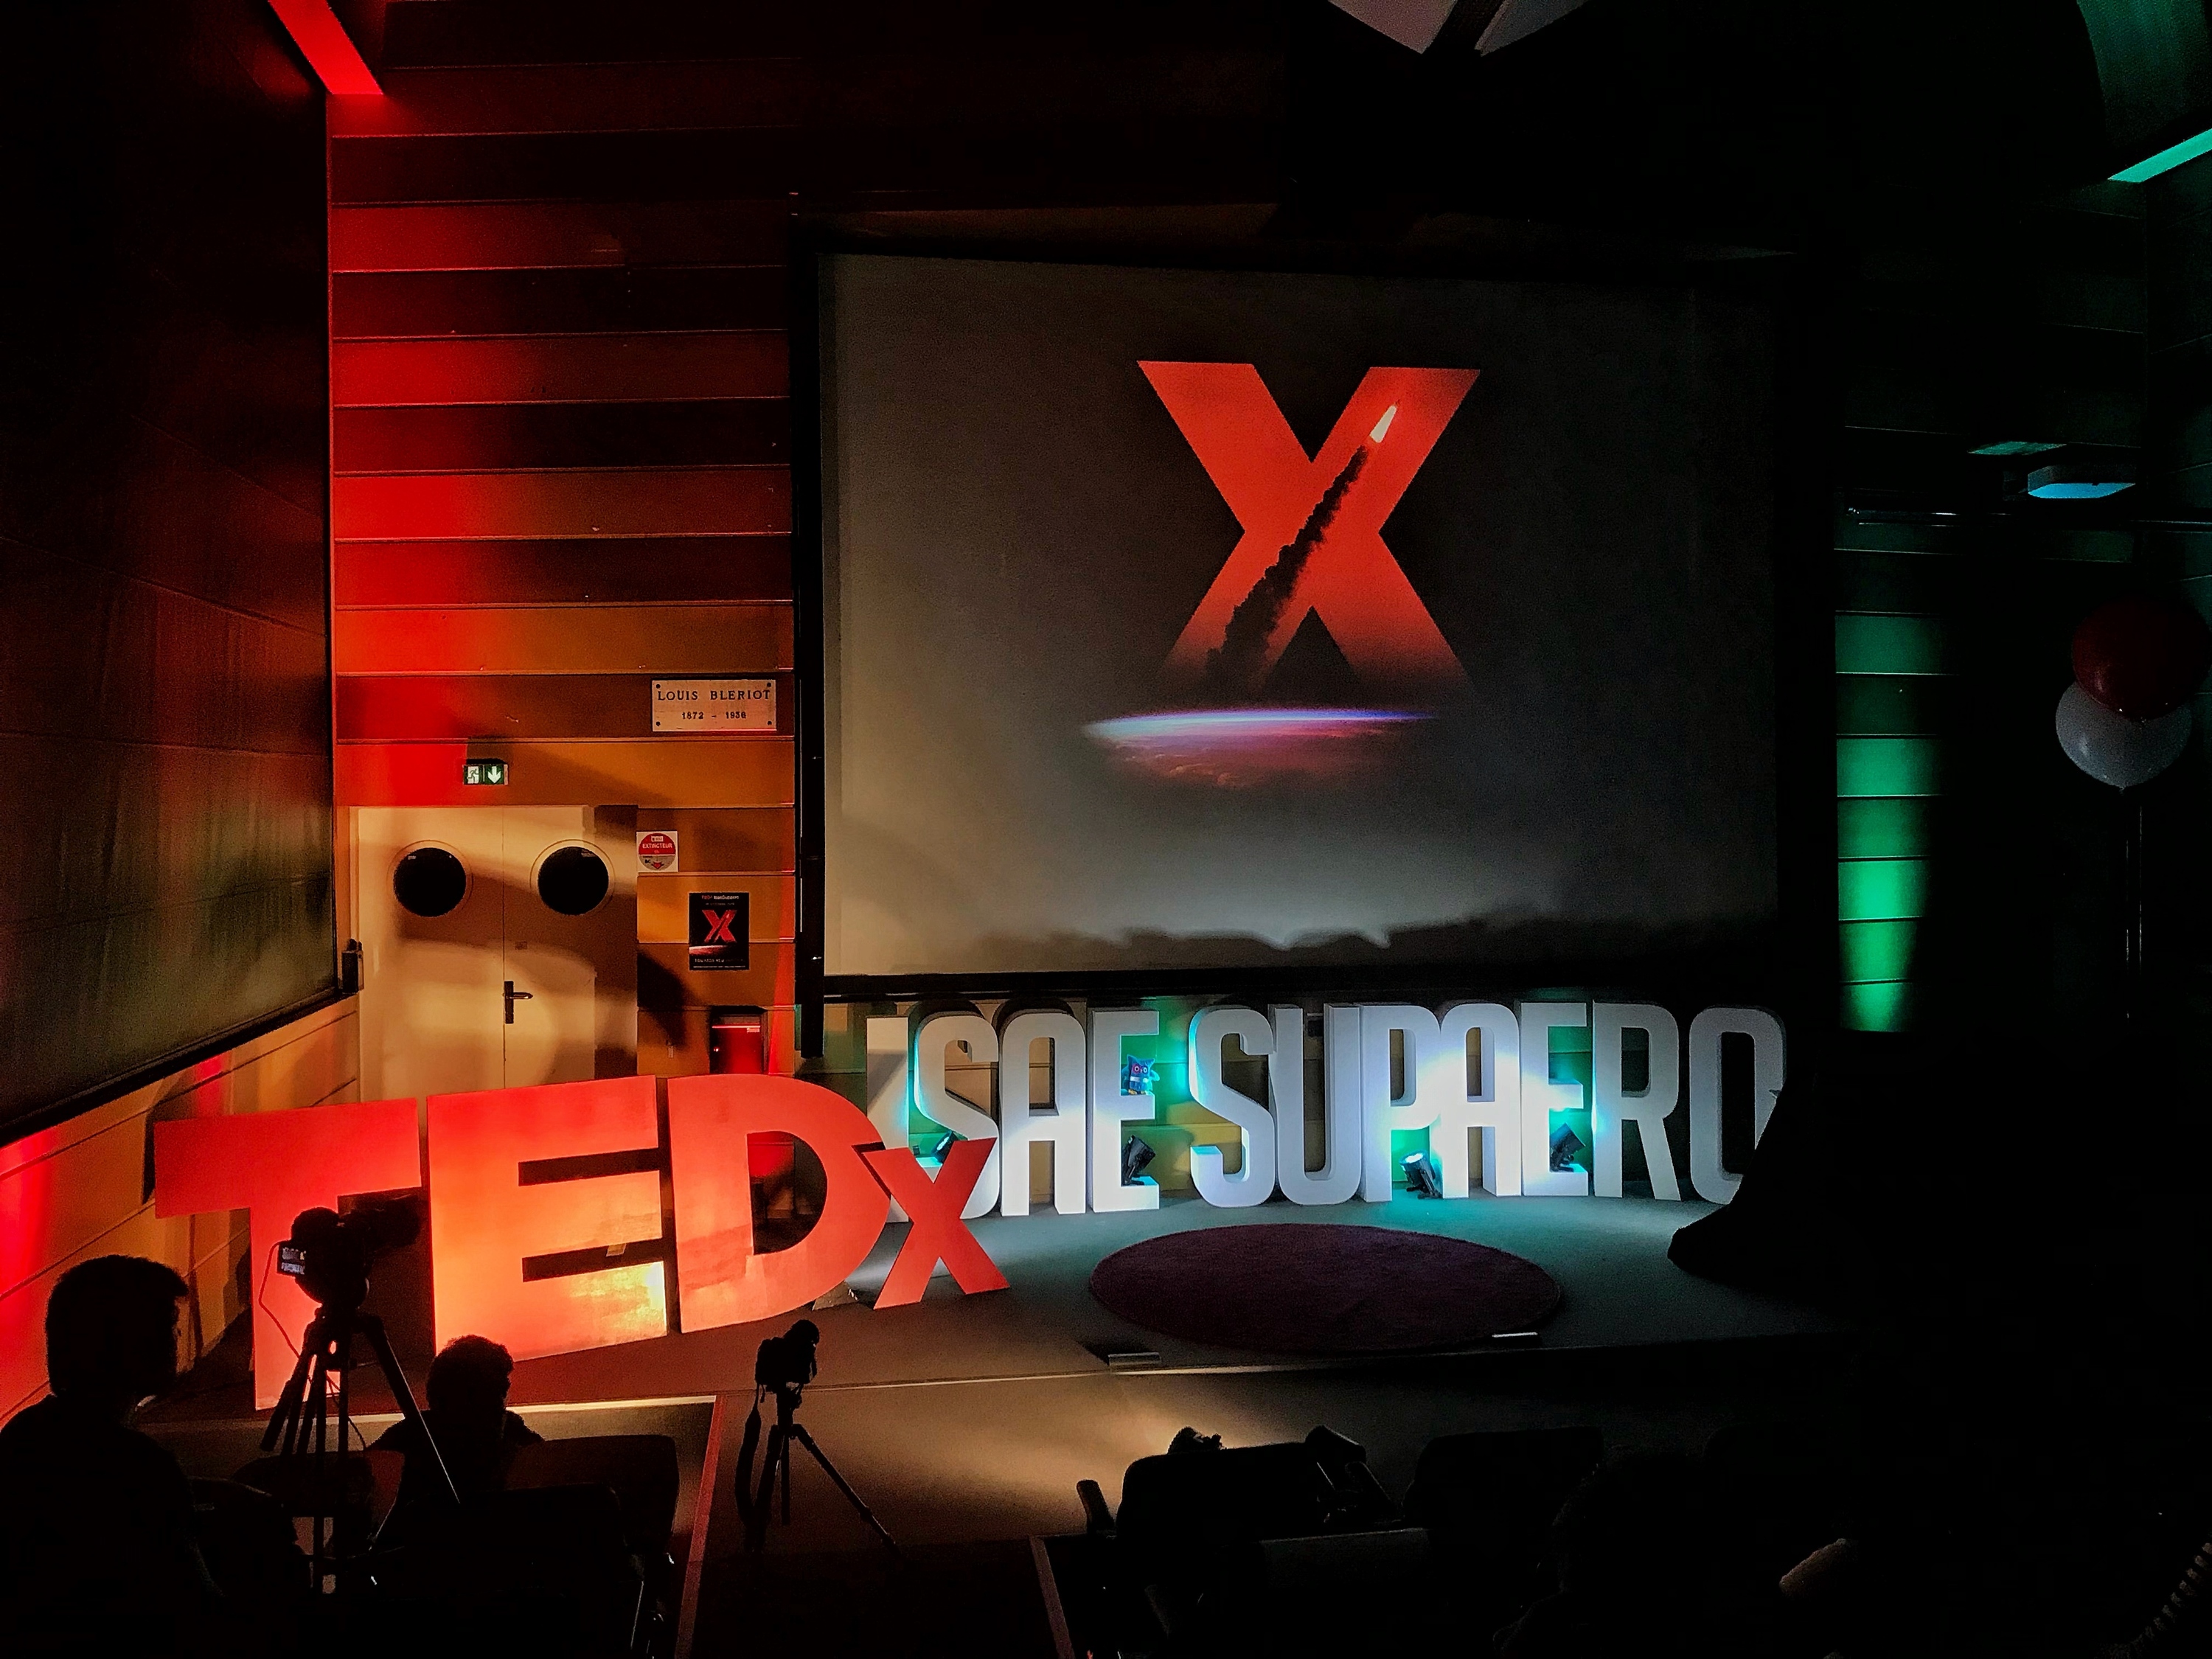 TEDxISAESUPAERO 2019 dans un des amphis de l'ISAE-SUPAERO